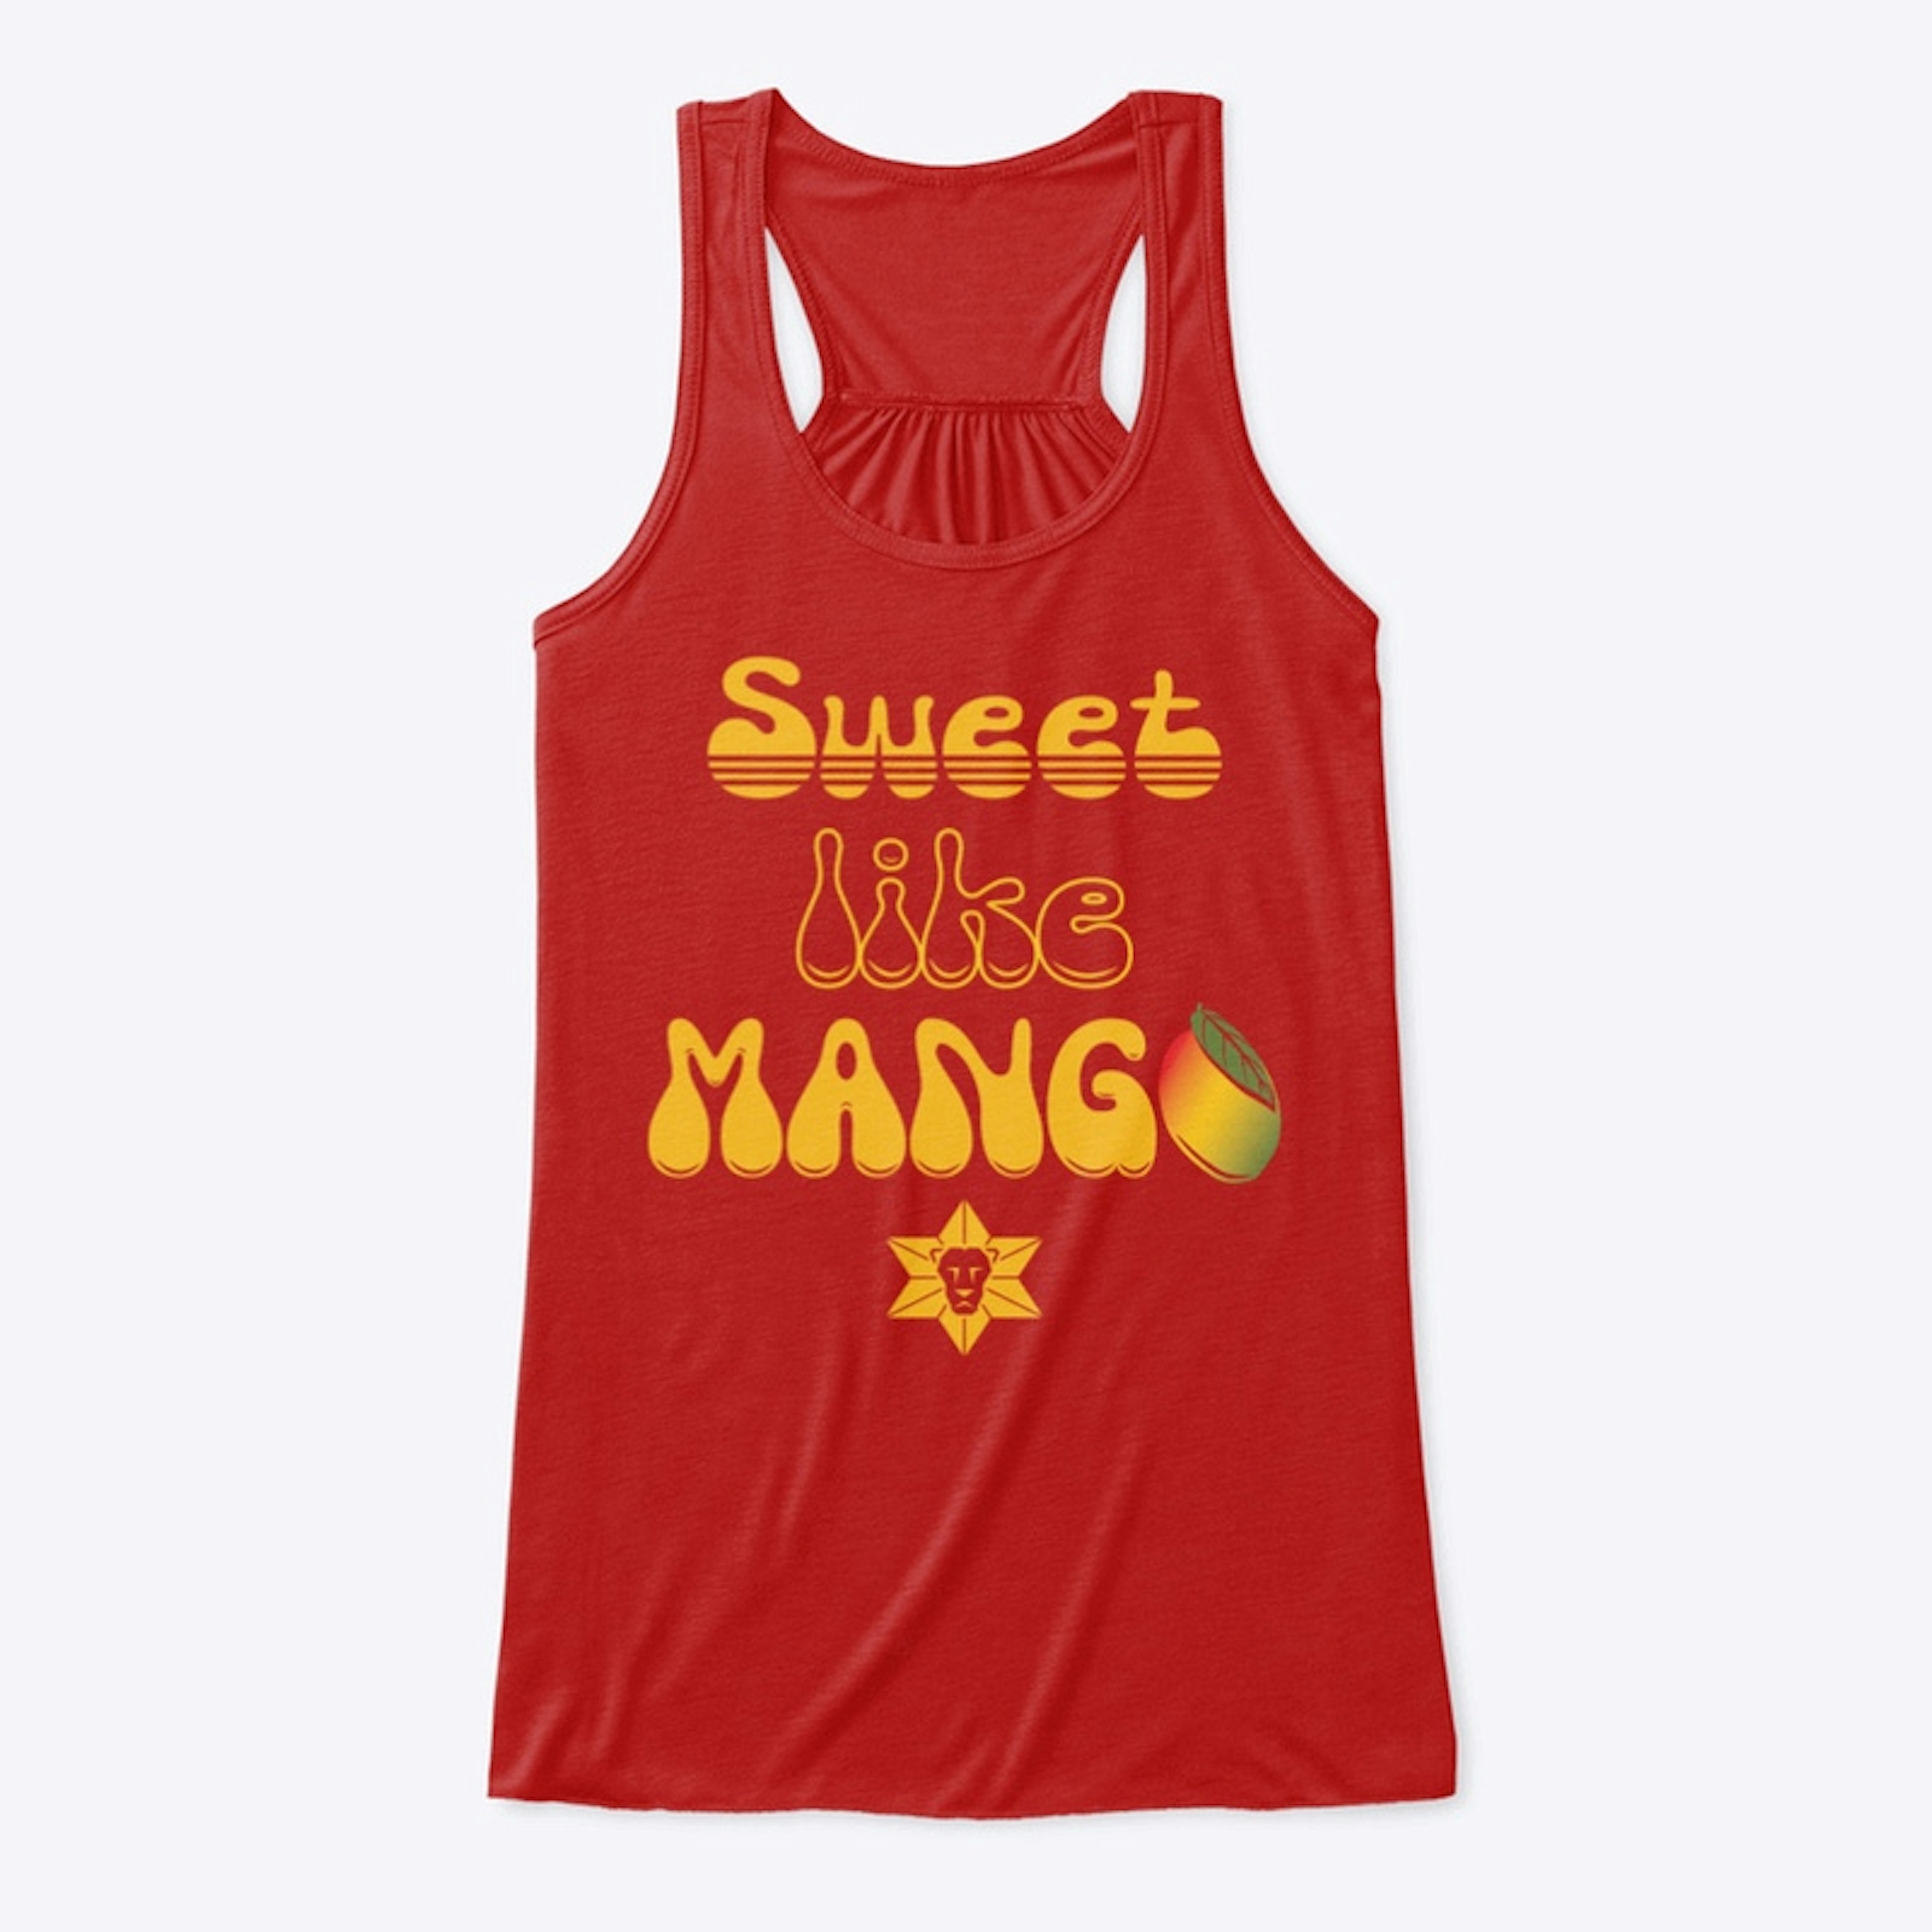 Sweet like Mango tank